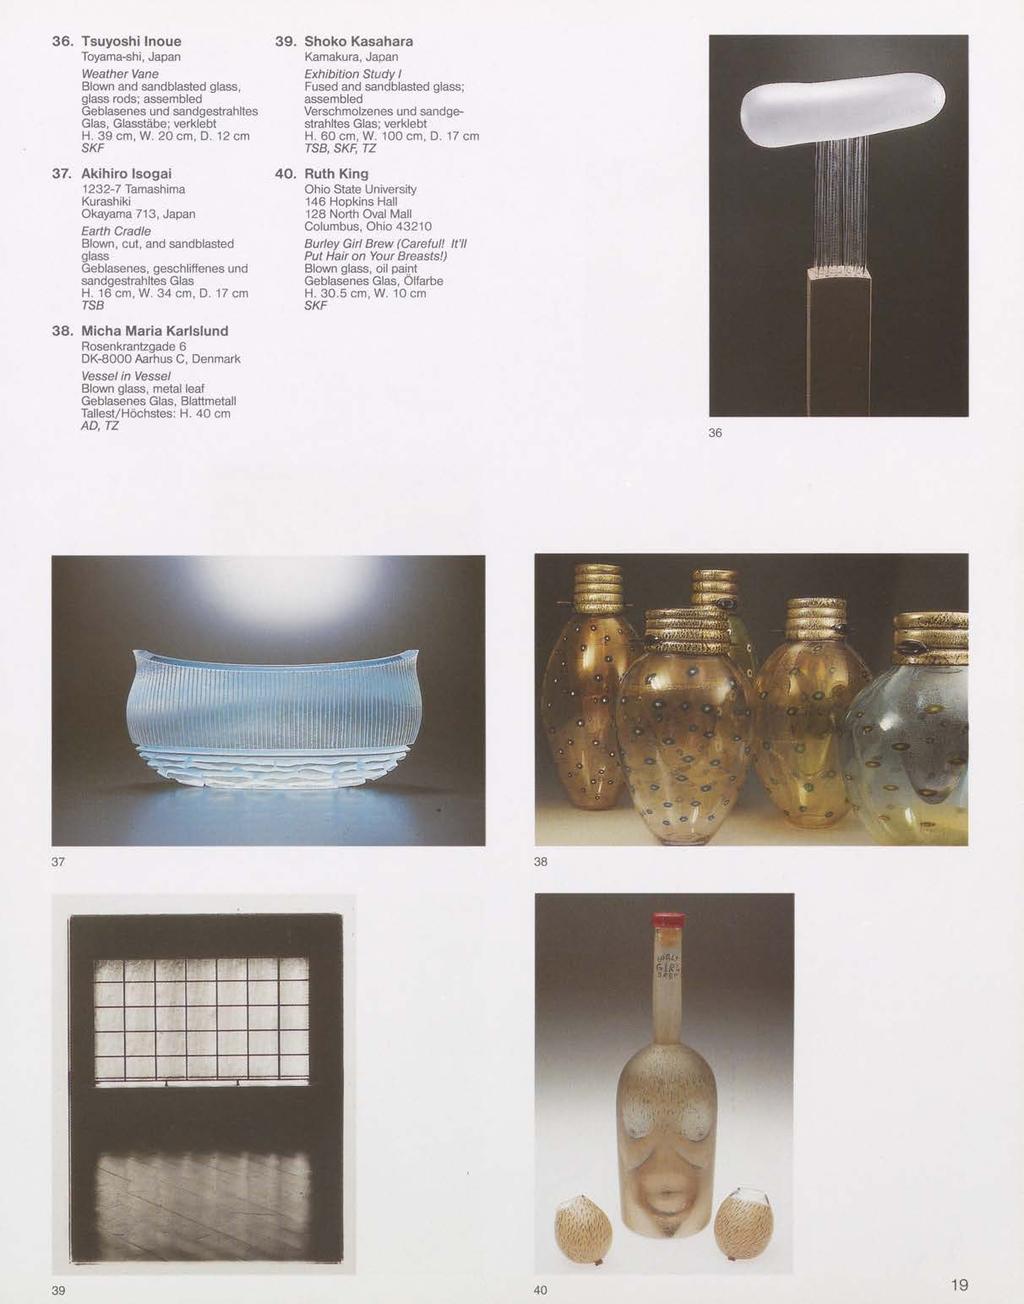 36. Tsuyoshi Inoue Toyama-shi, Japan Weather Vane Blown and sandblasted glass, glass rods; assembled Geblasenes und sandgestrahltes Glas, Glasstabe; verklebt H. 39 cm, W. 20 cm, D. 12 cm SKF 37.